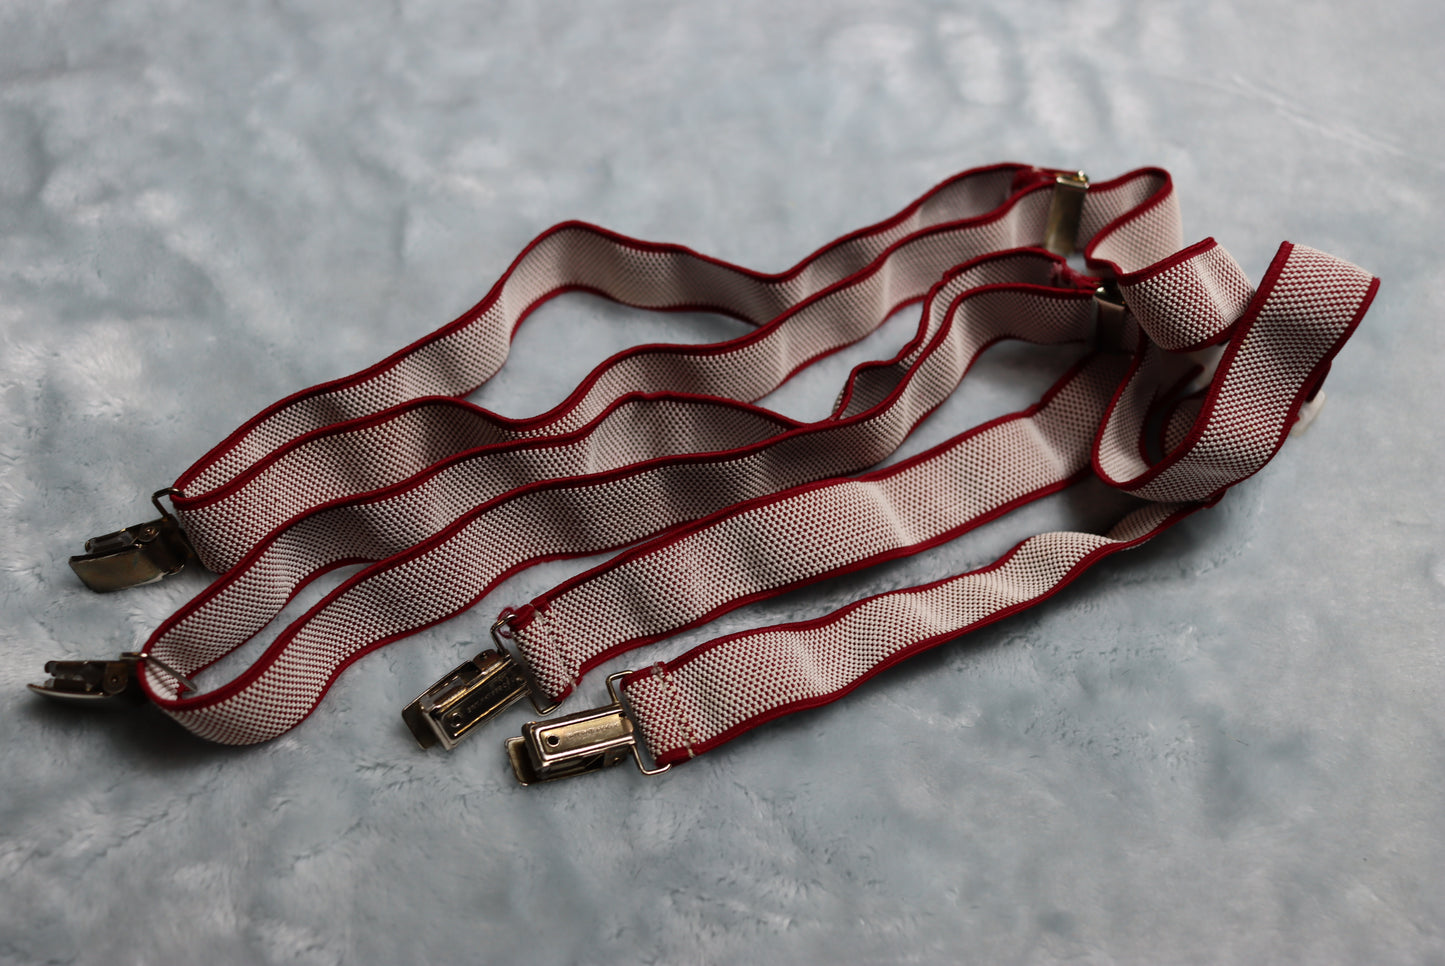 Vintage 1970s dark red white elasticated braces silver metal clips adjustable